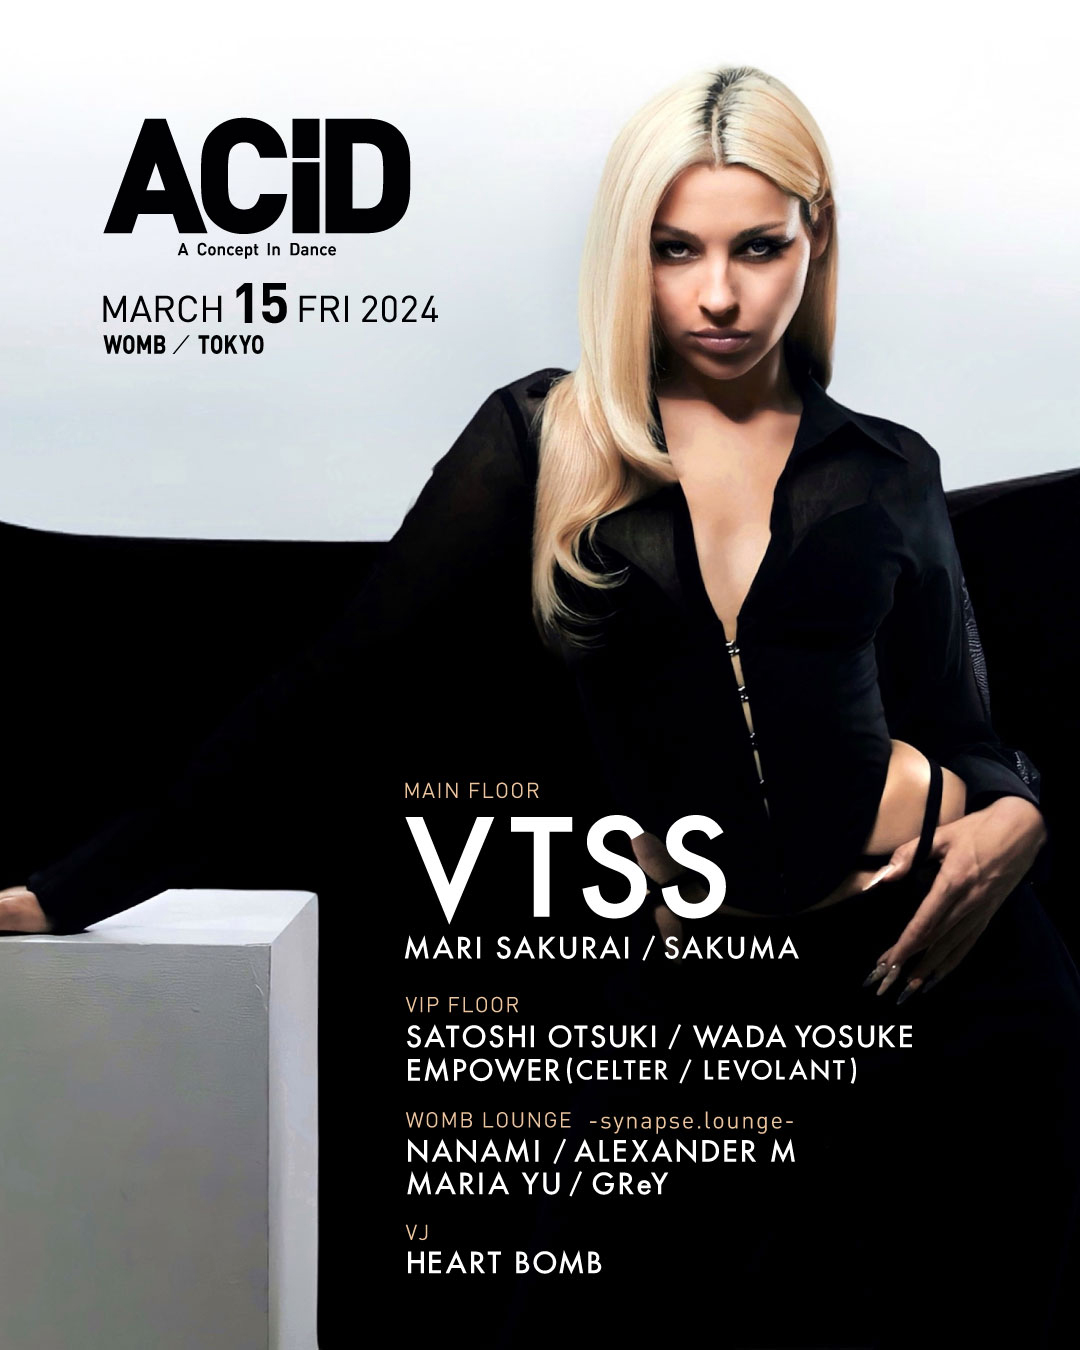 ACiD: A Concept in Dance - VTSS